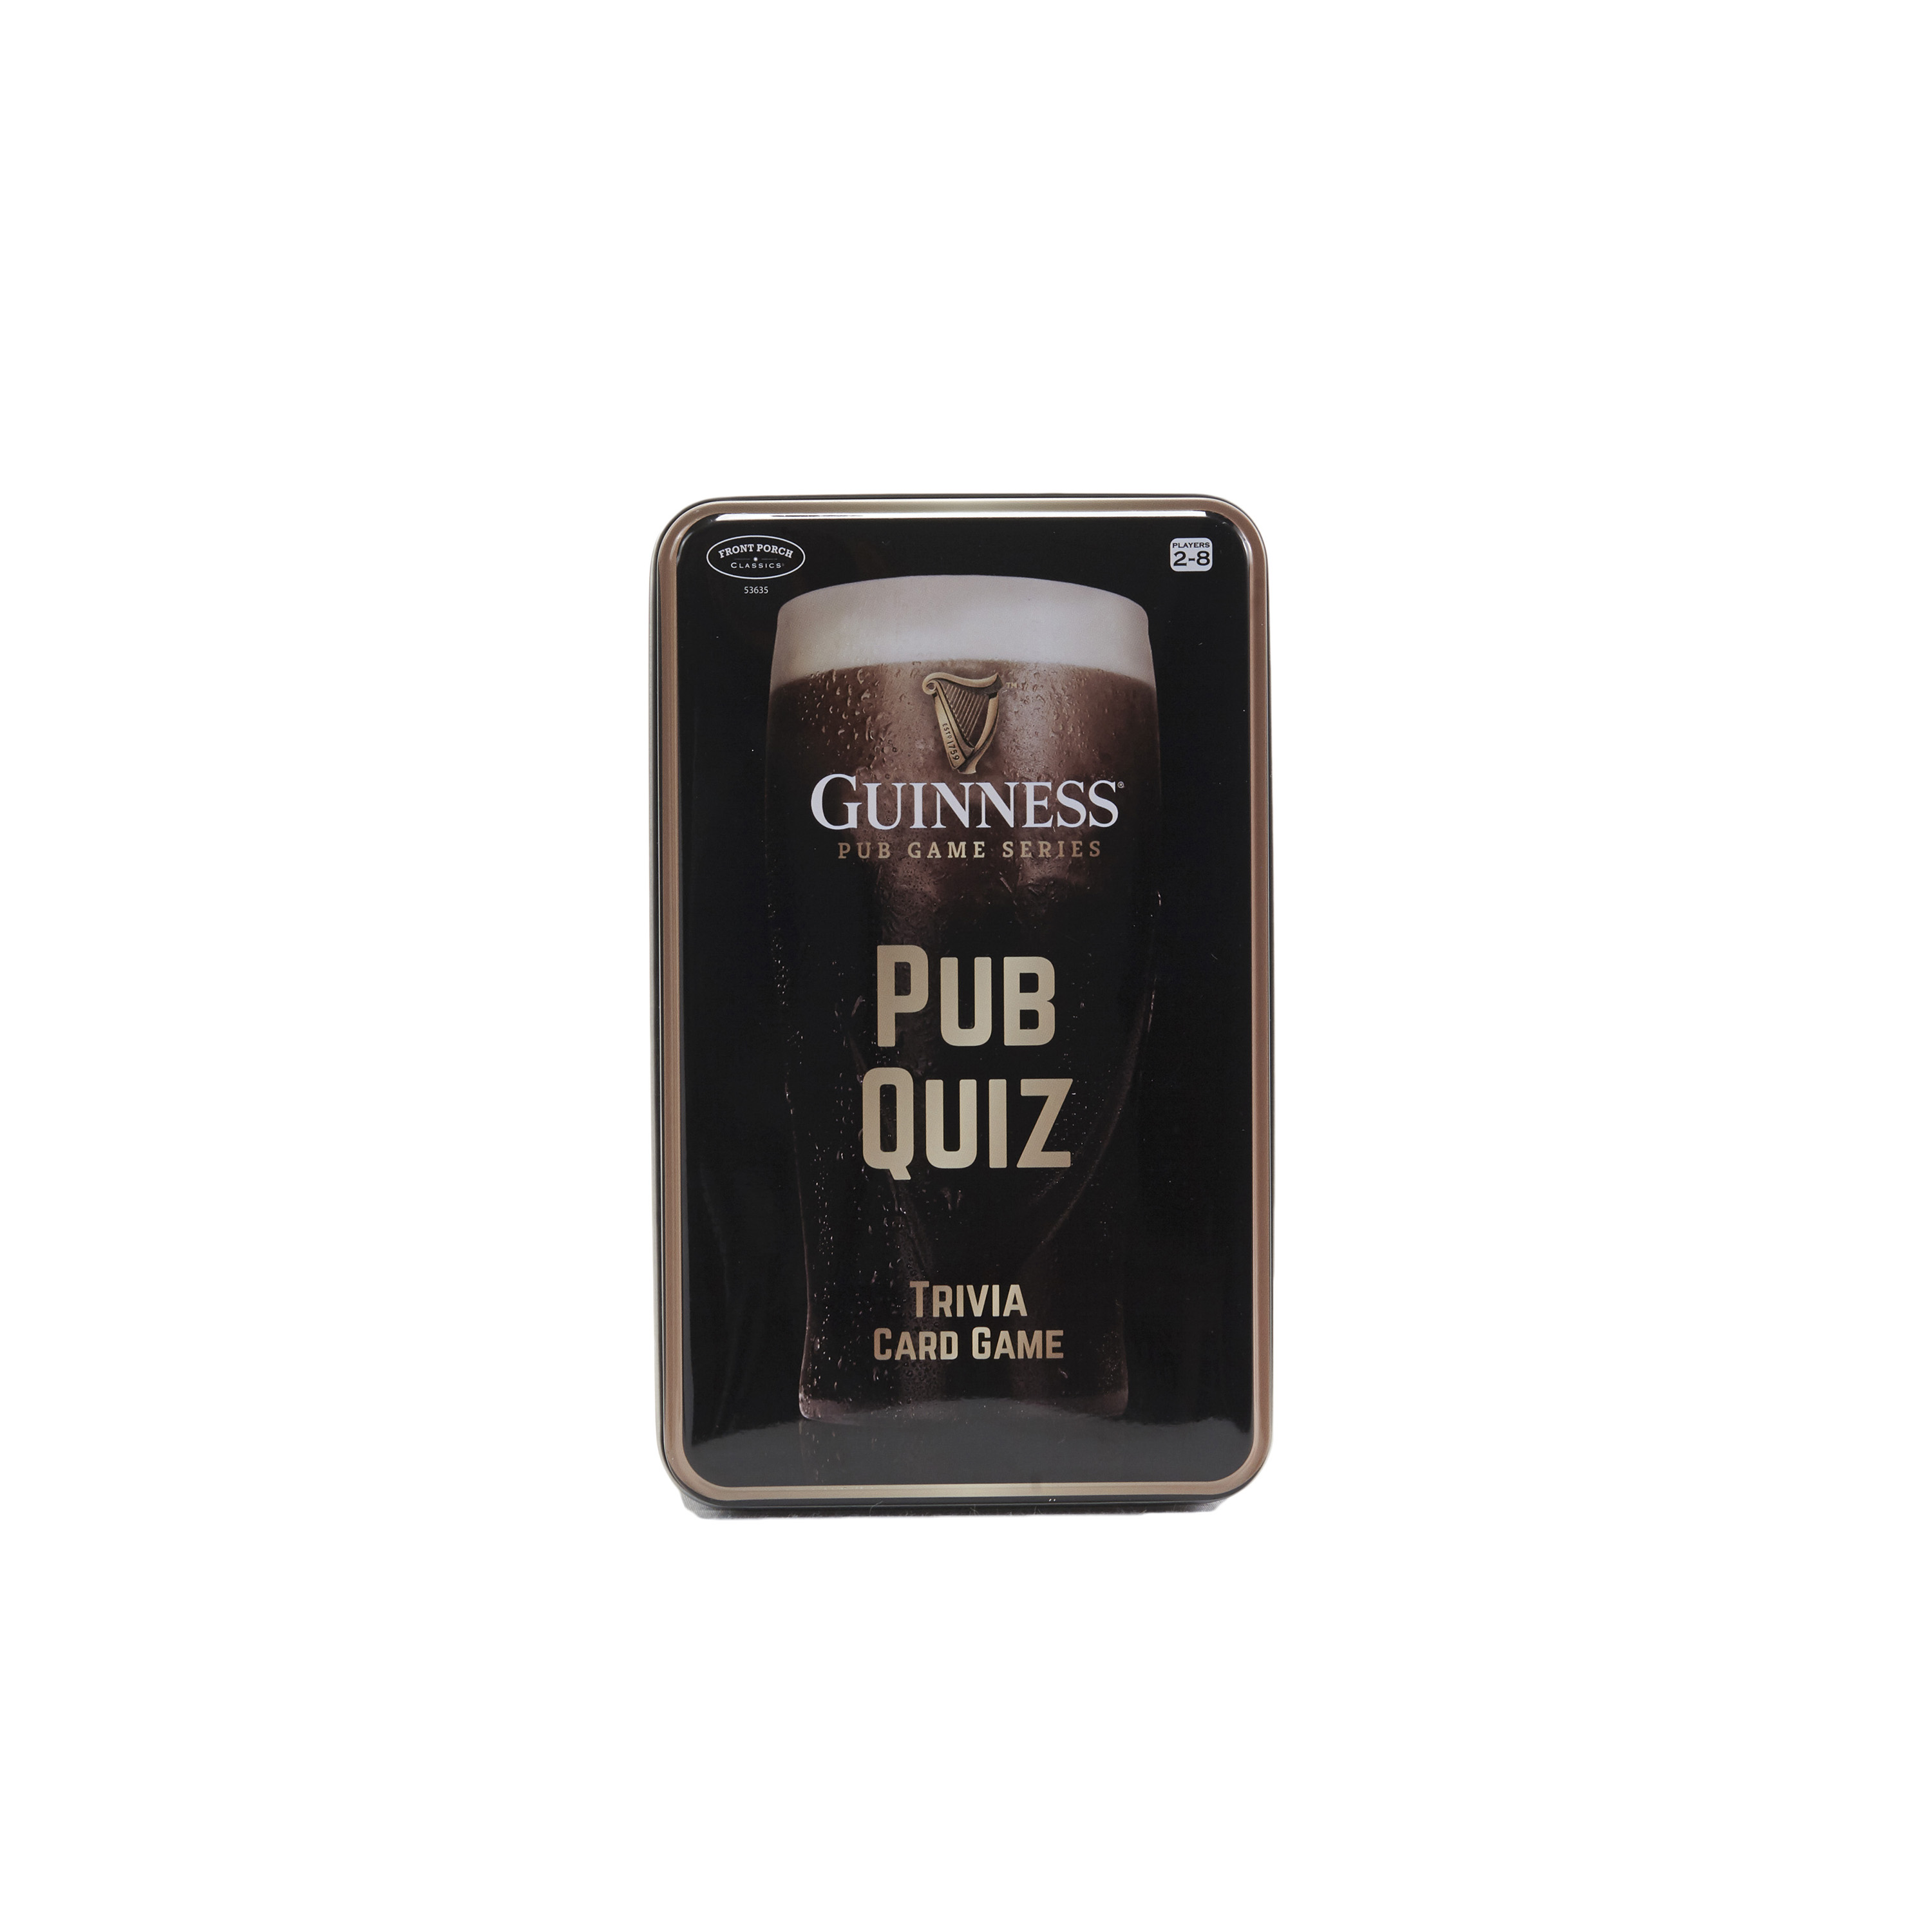 Guinness Pub Game Series: Pub Quiz Trivia Card Game